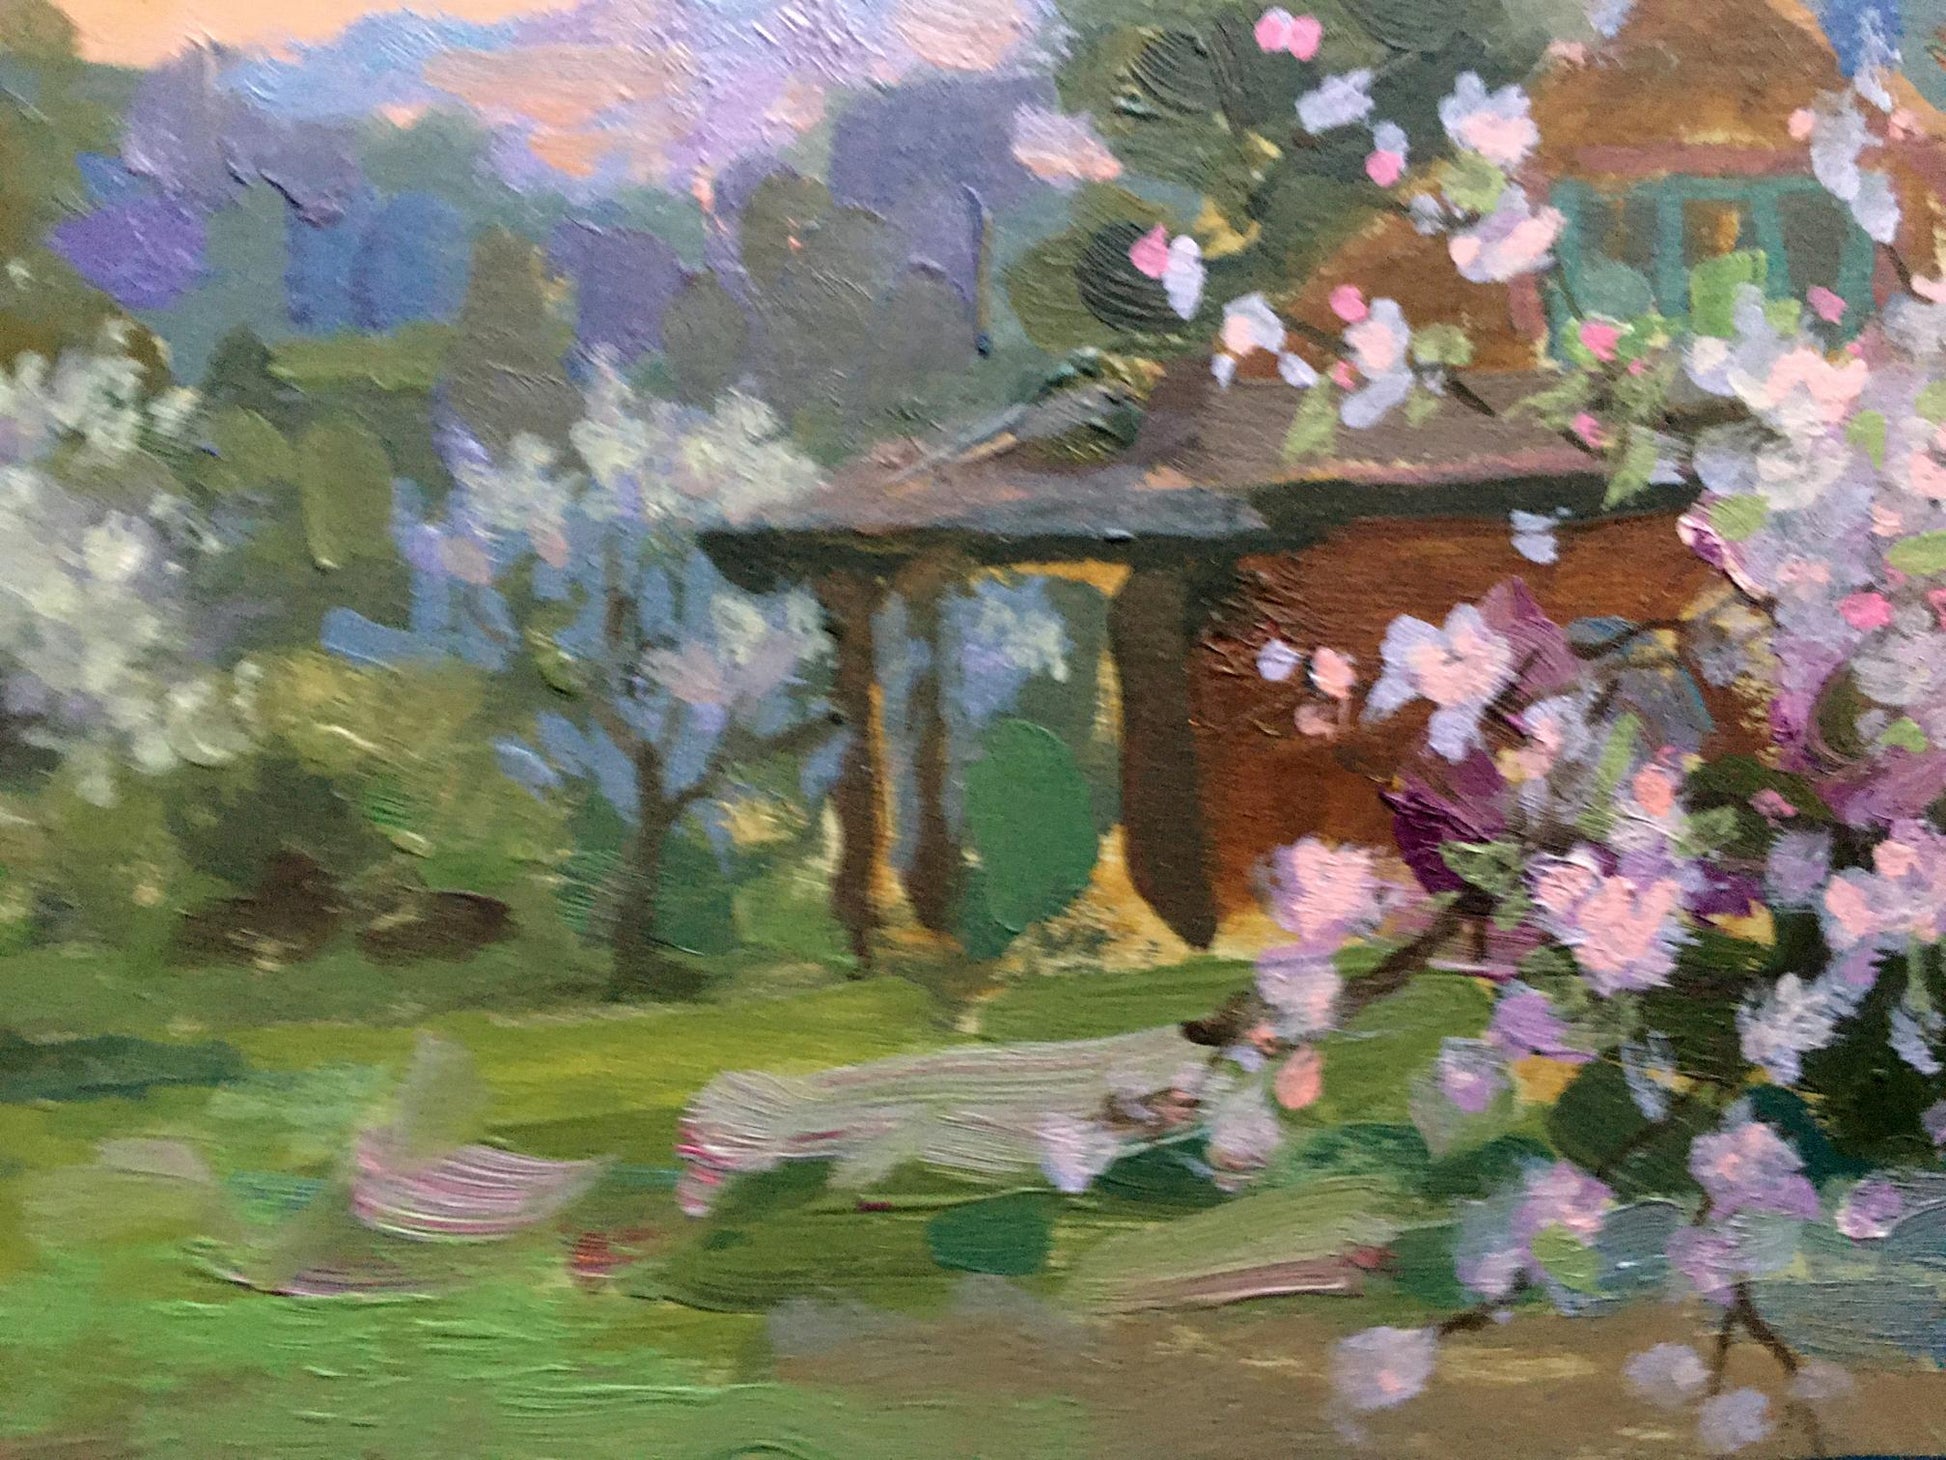 Vladimir Batrakov's oil painting "Blooming Garden in the Evening"